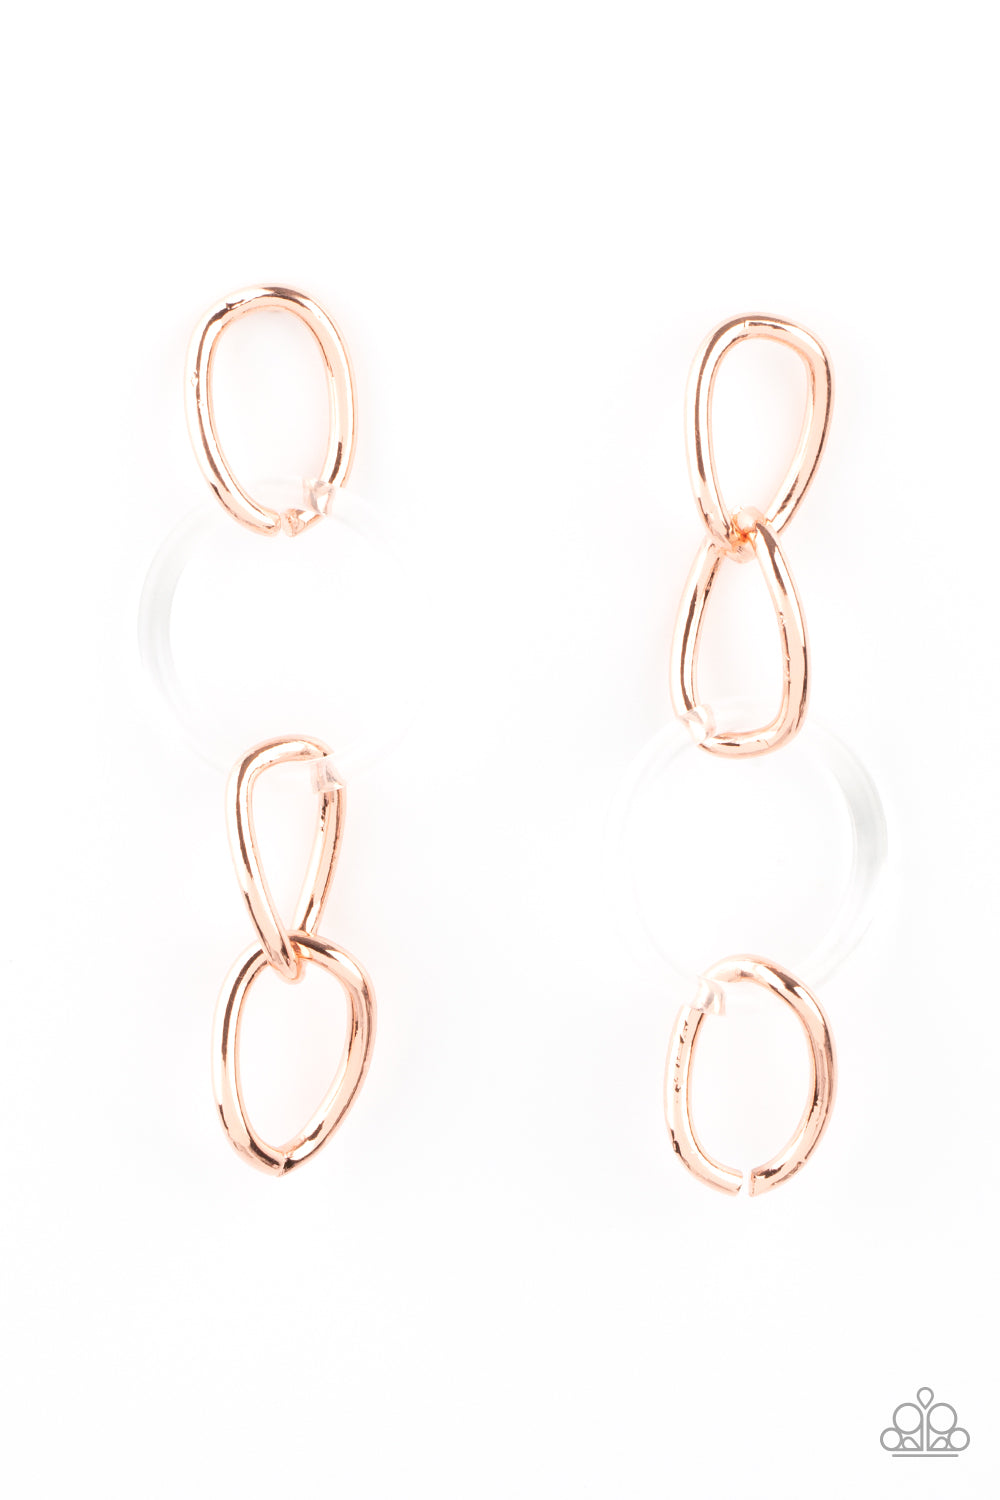 Talk In Circles - copper - Paparazzi earrings